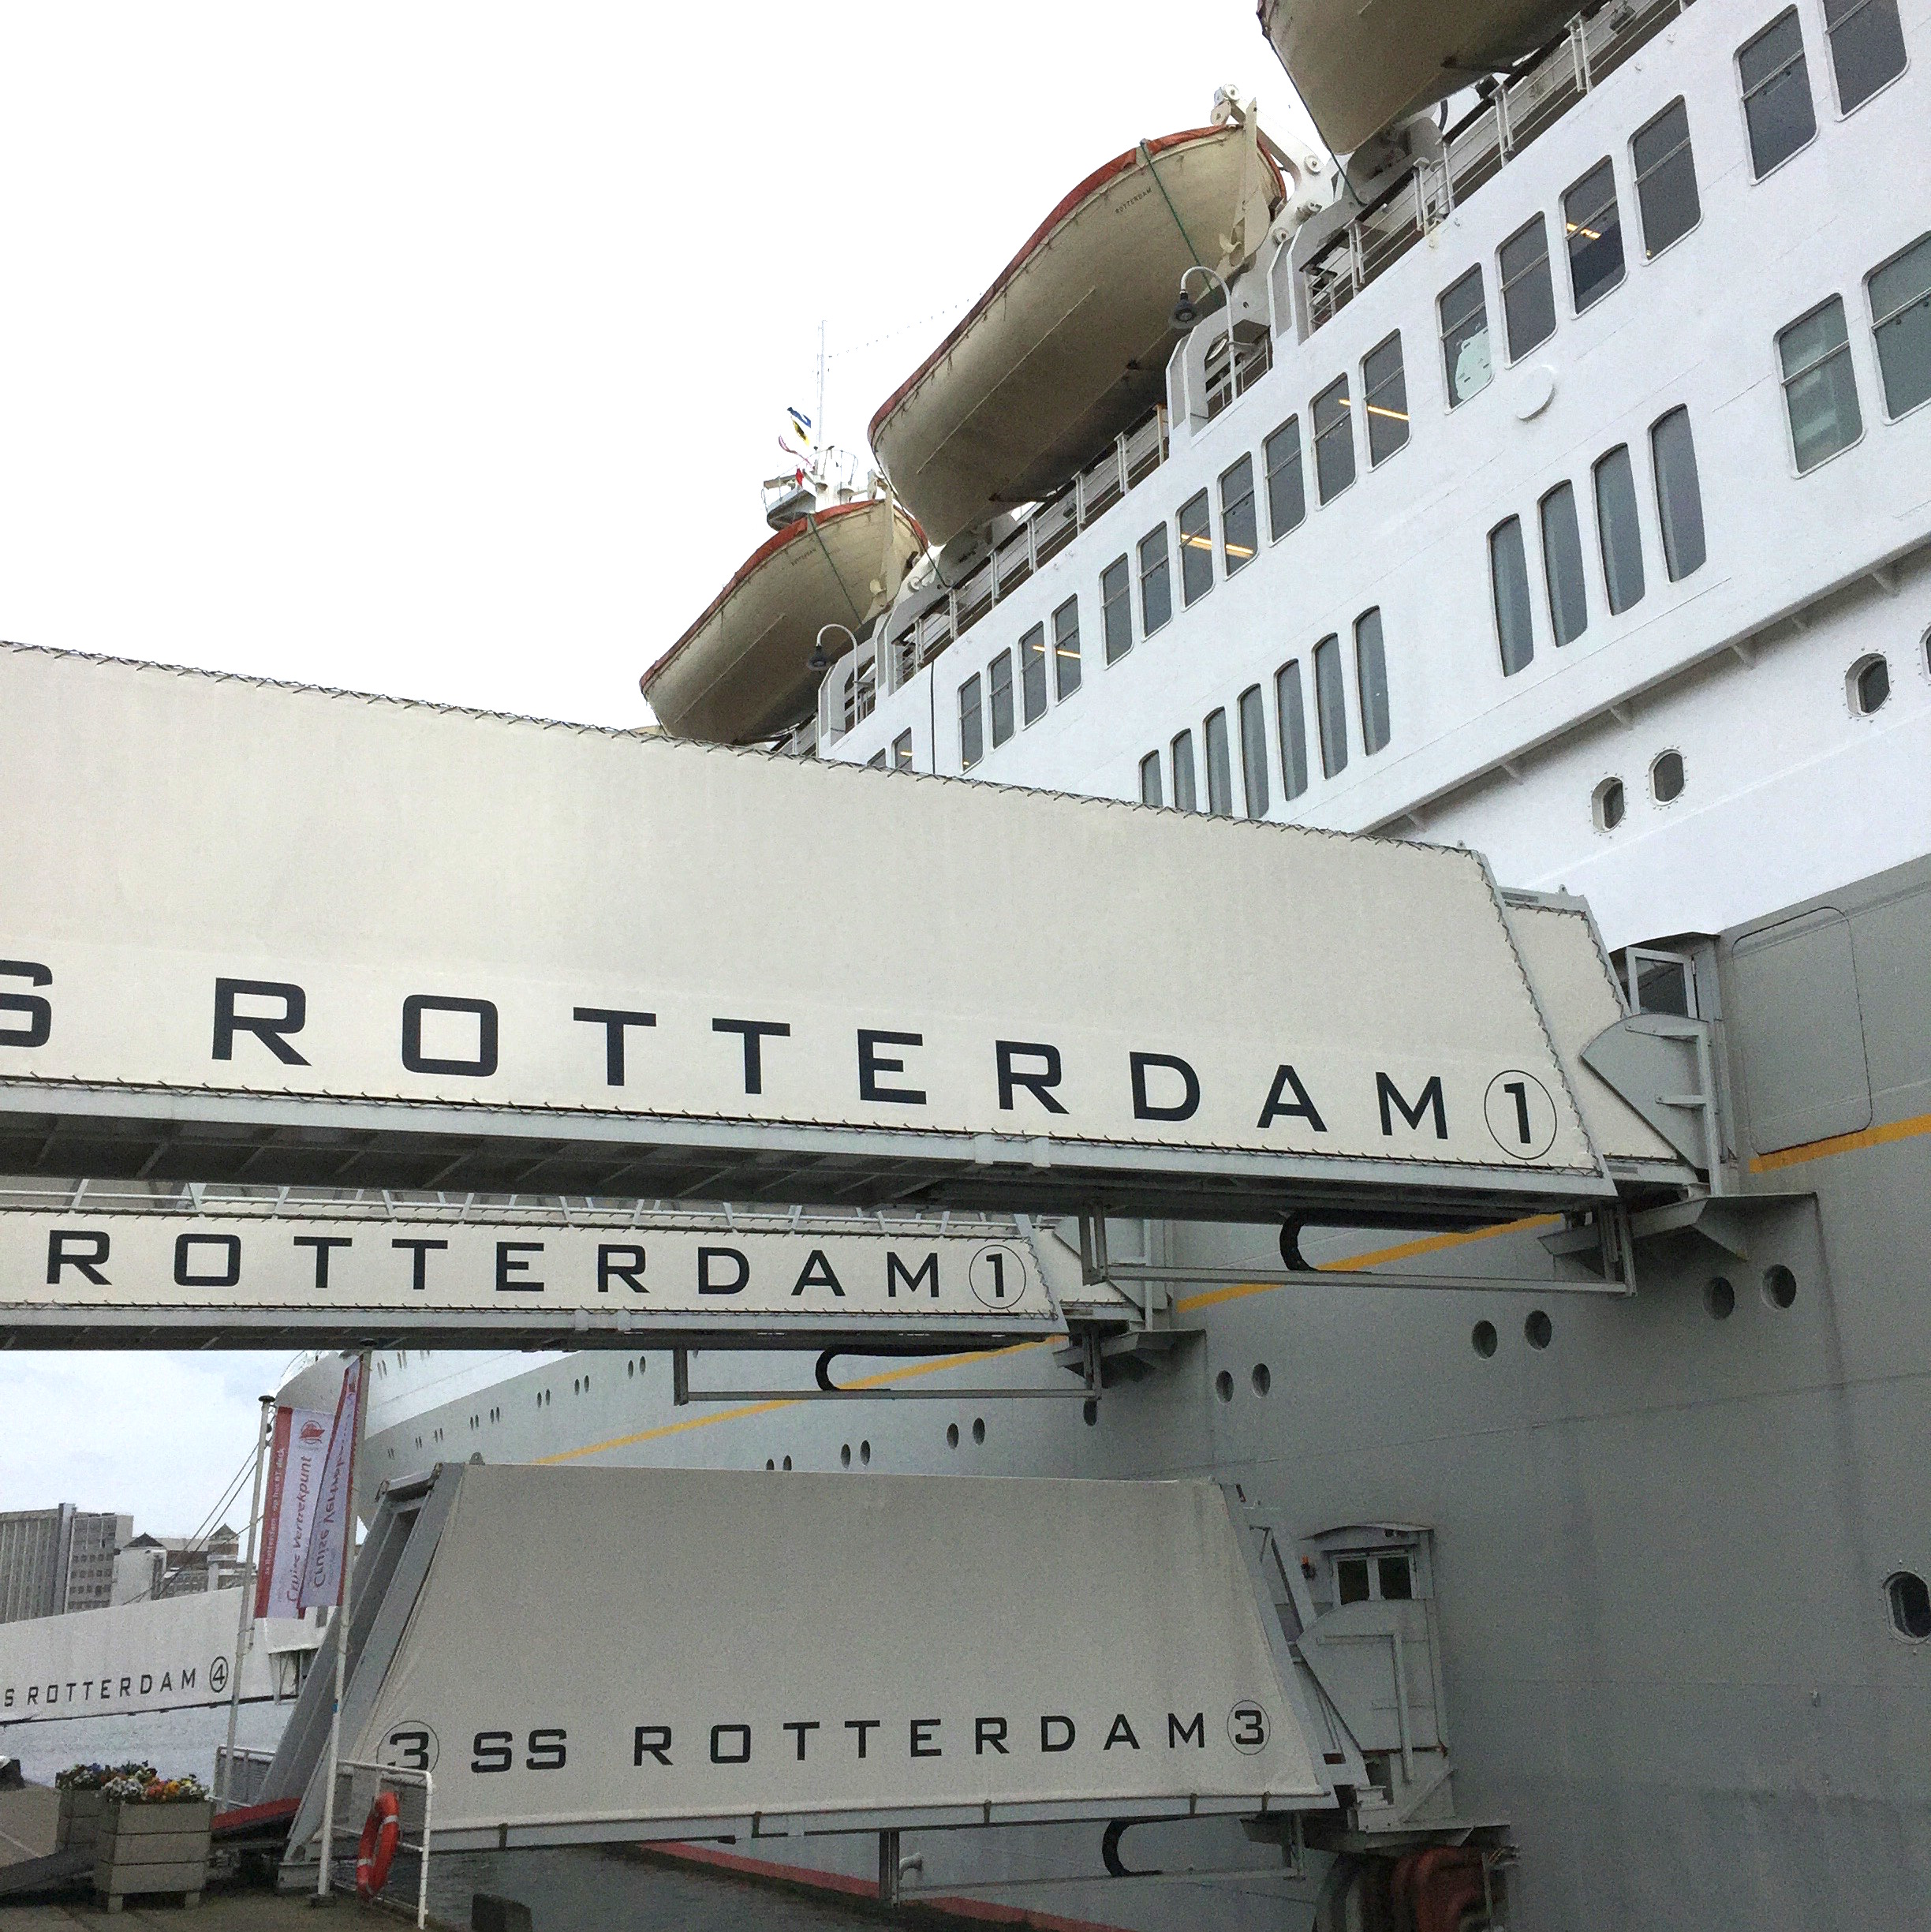 SS Rotterdam 